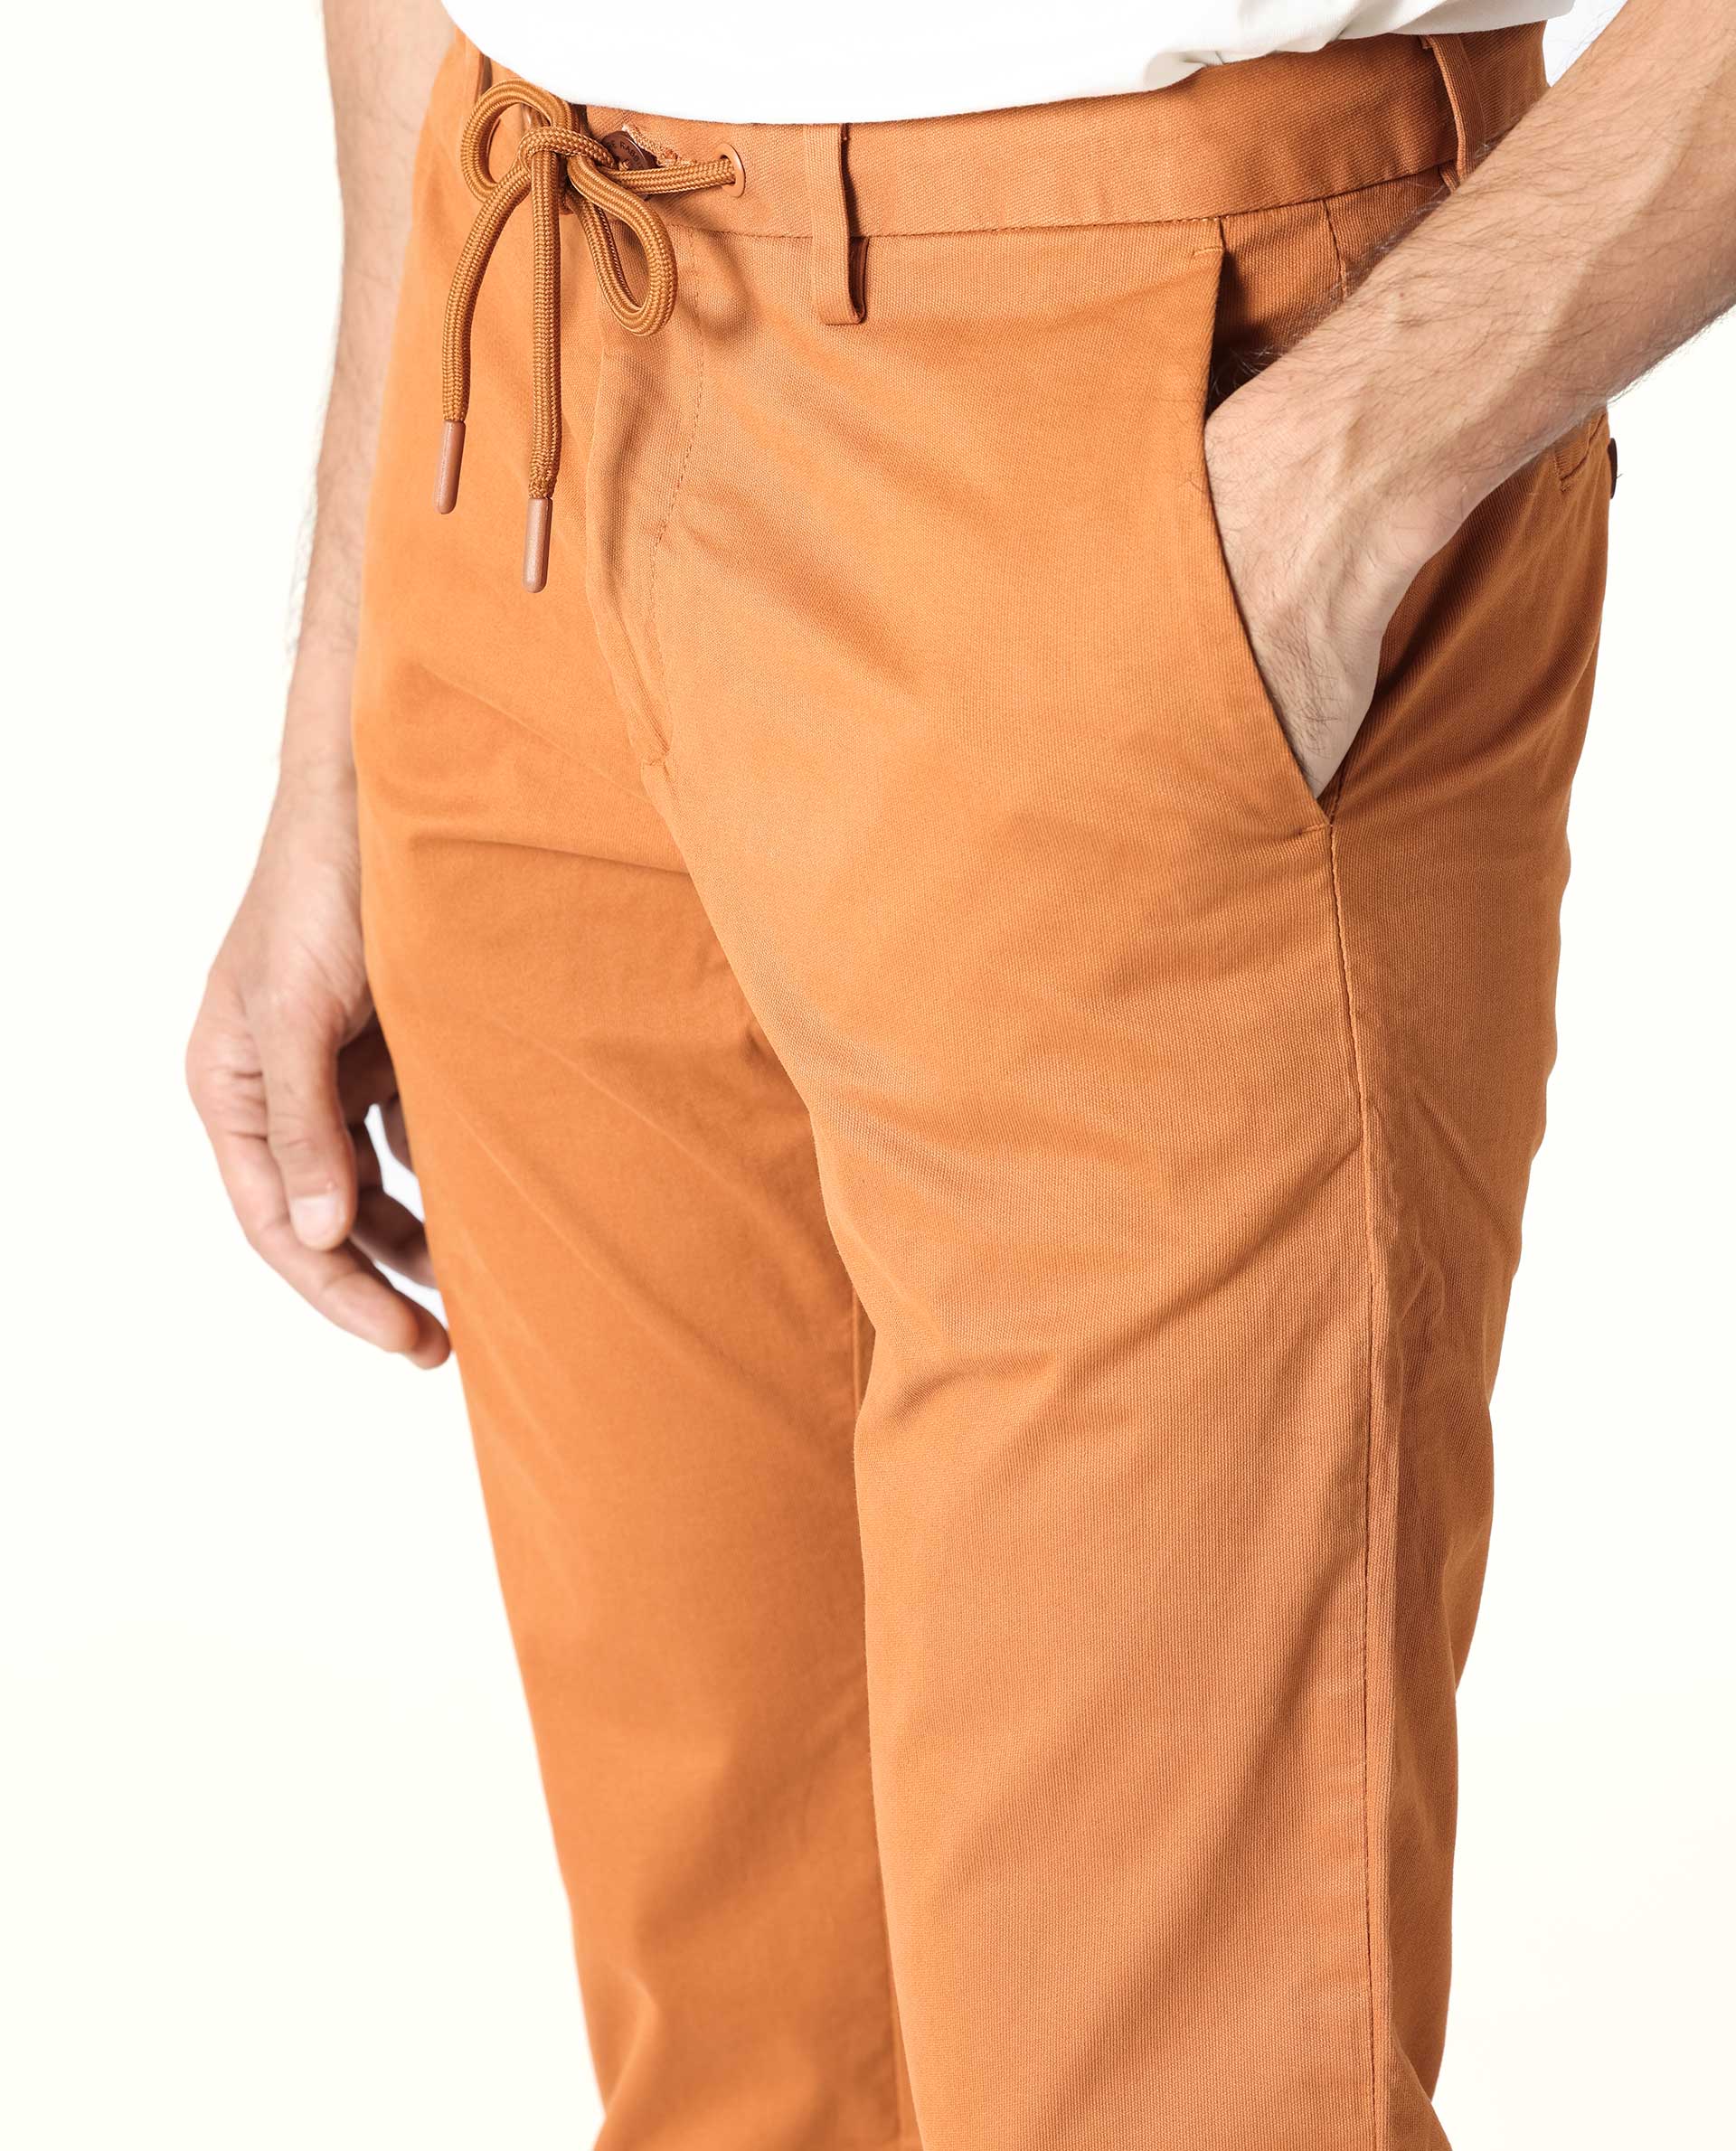 Men's elastic waist pants by raf simons on Craiyon